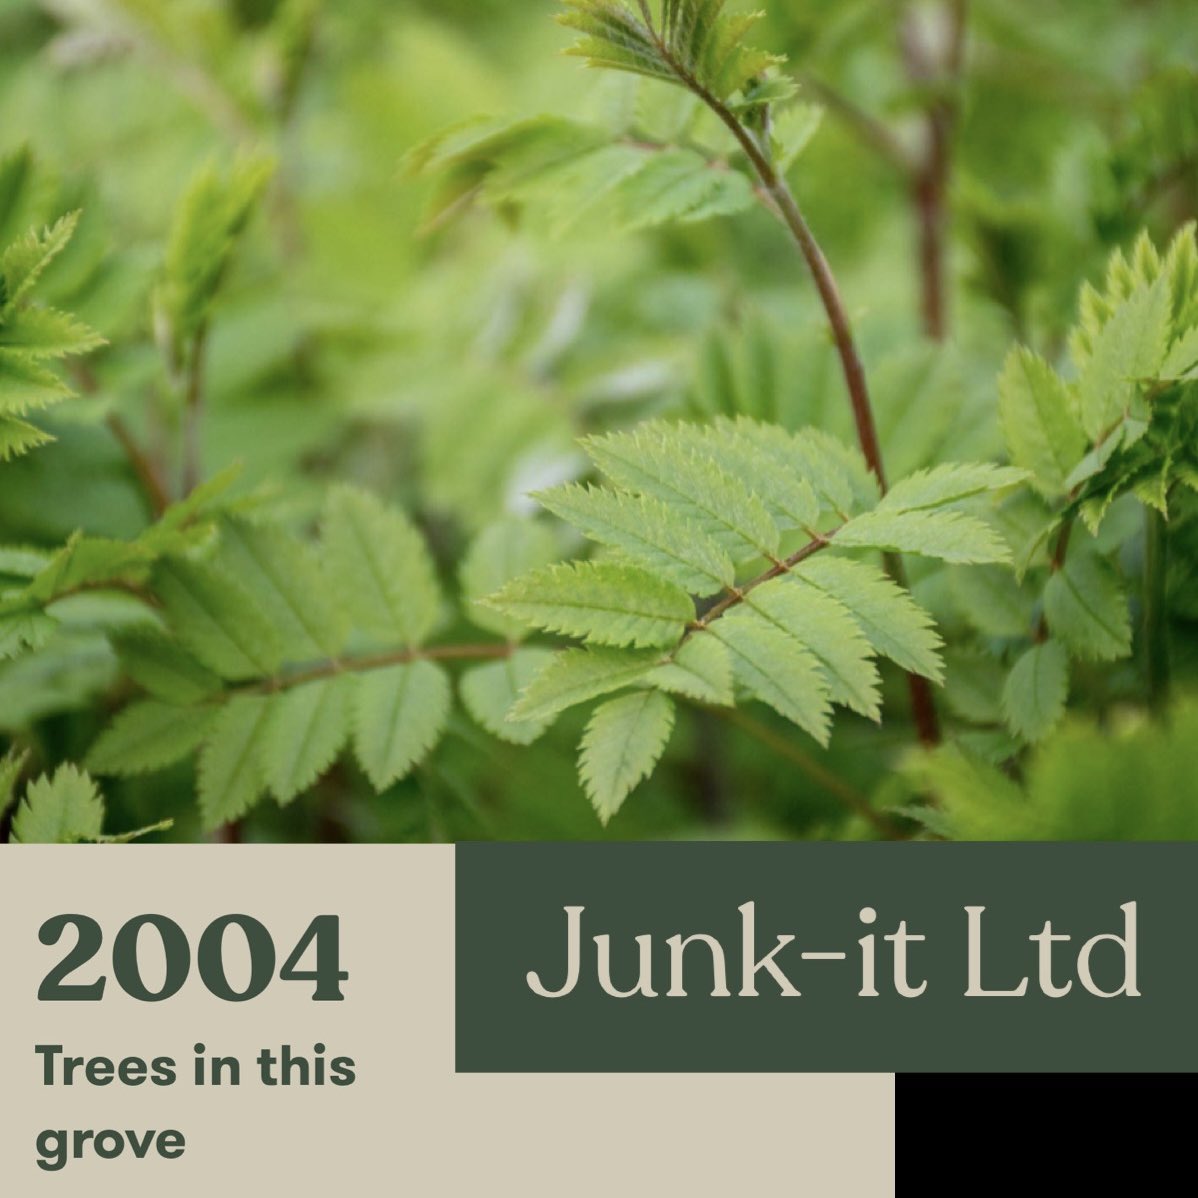 Over 2000 trees in the Junk-it grove!!! 

#junkheroes #junkitscotland #plantatree #rewilding #Scotland